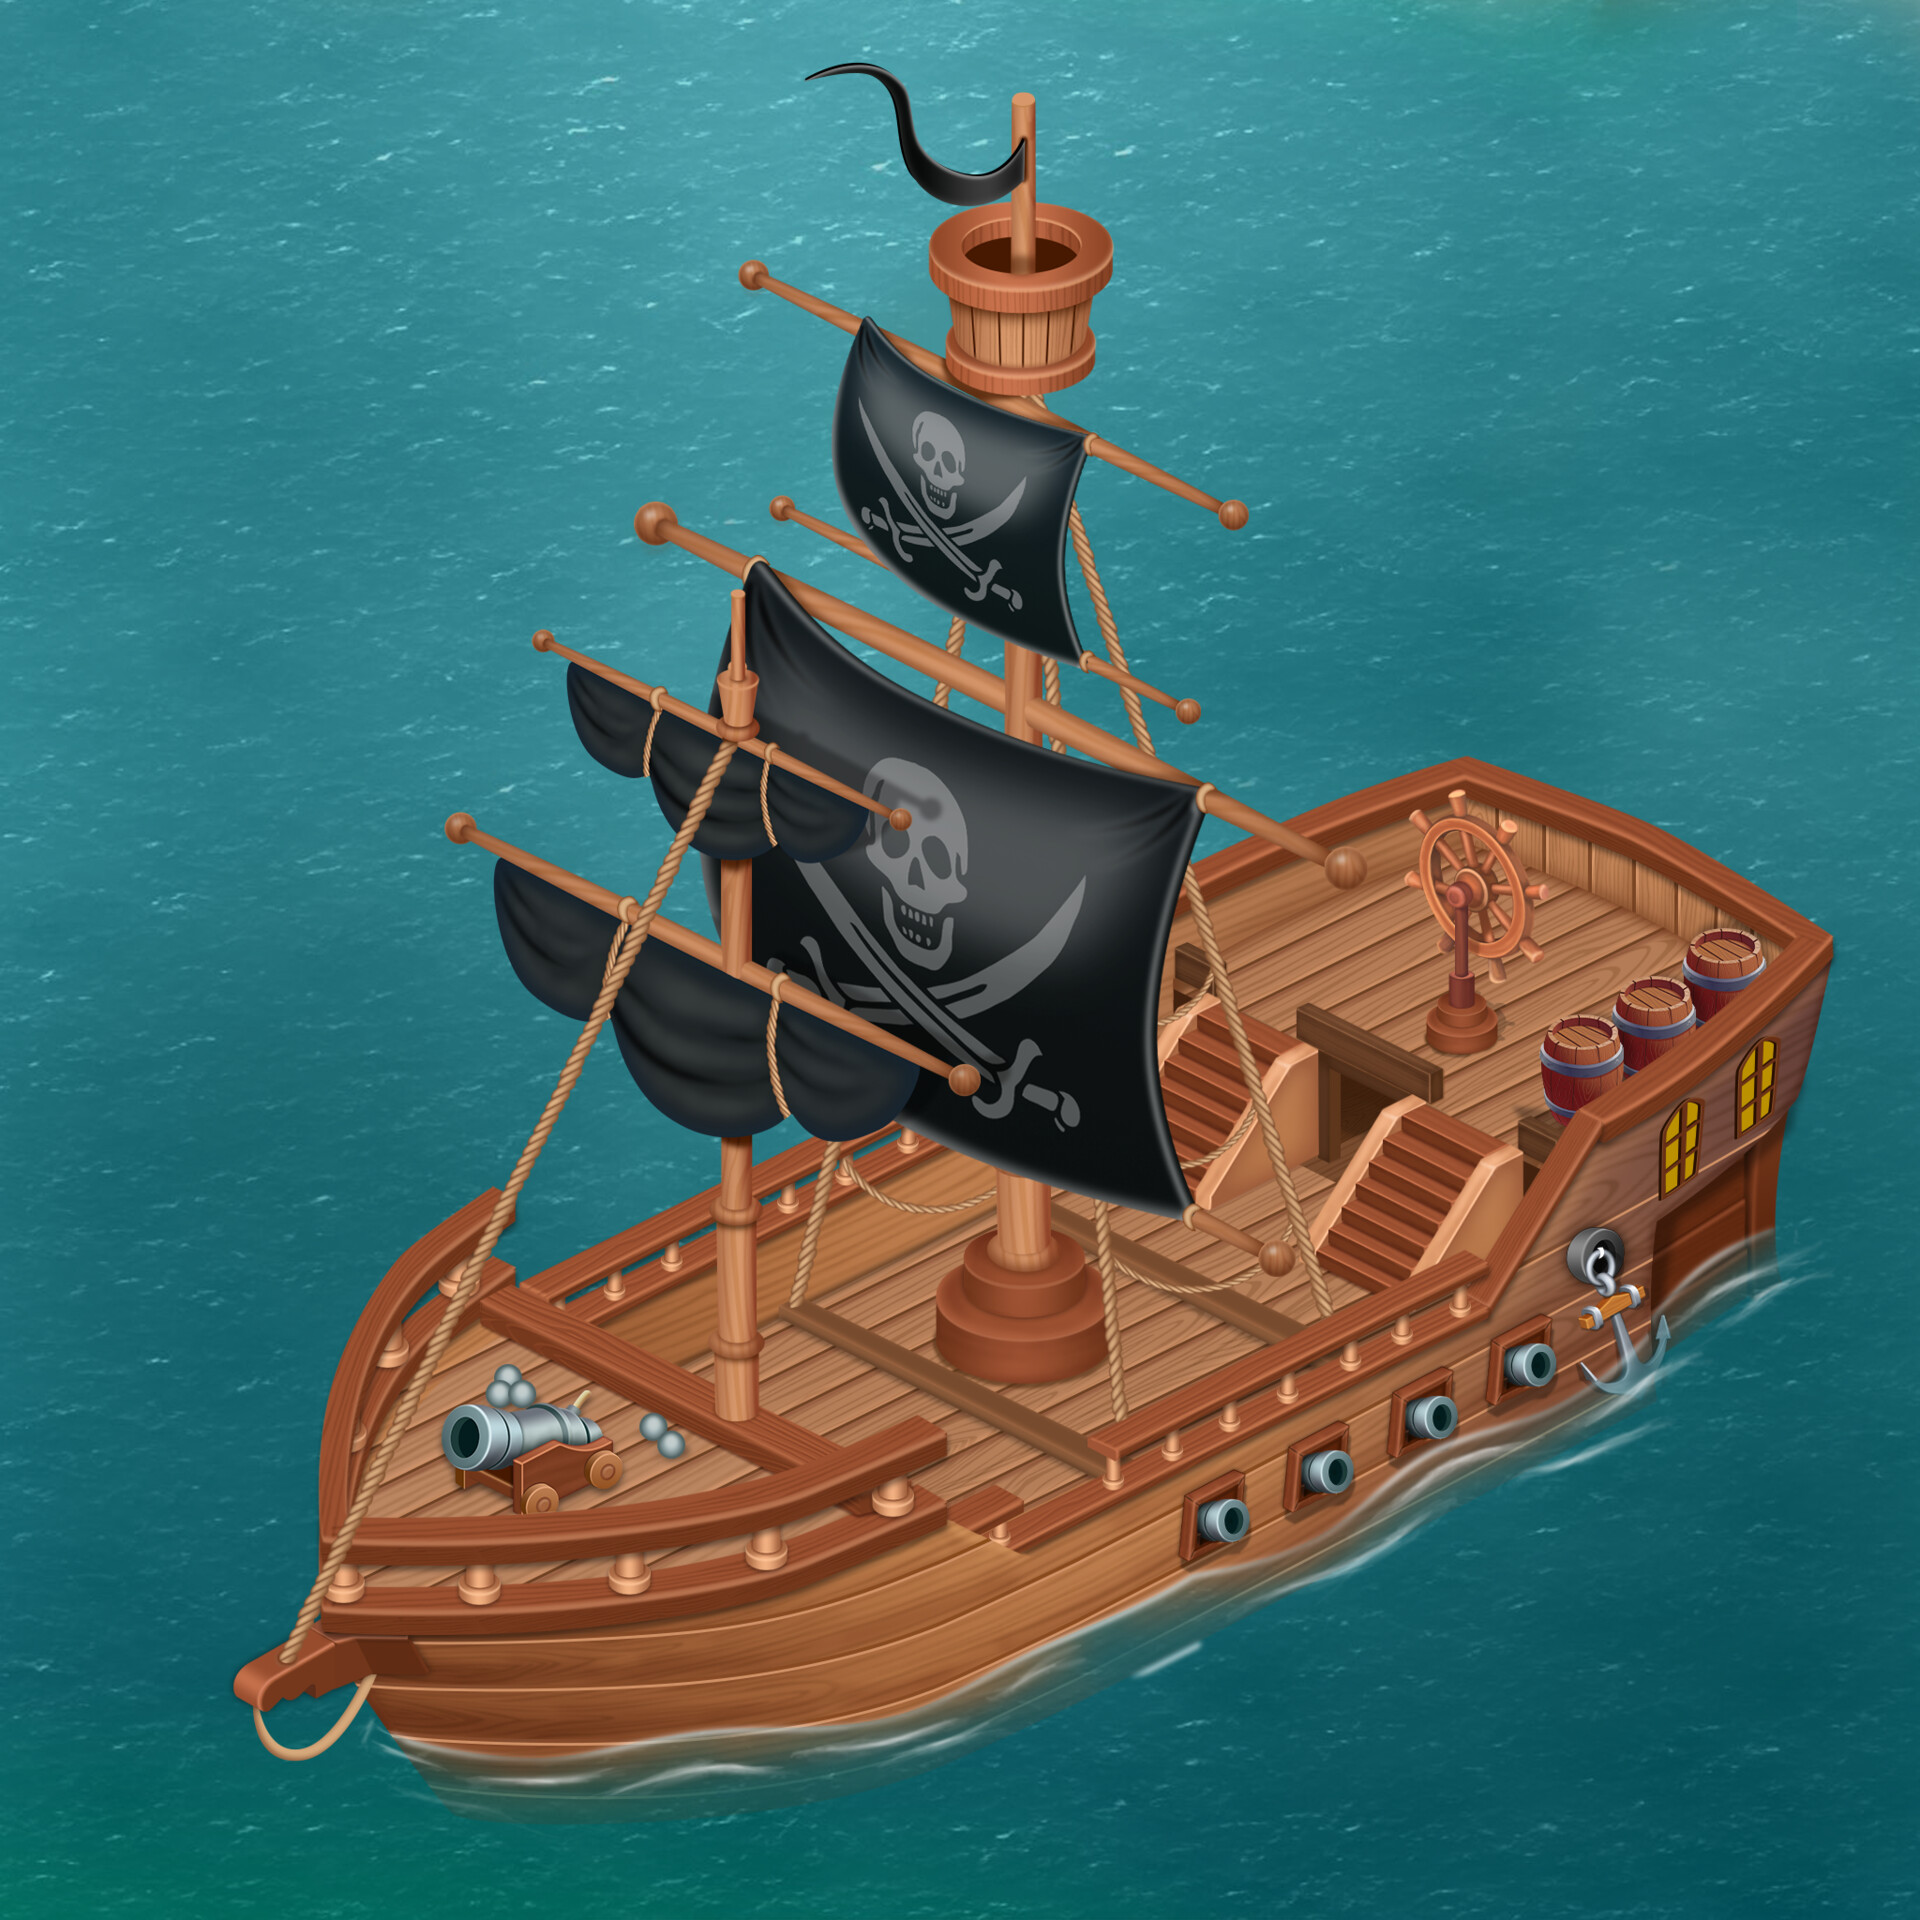 ArtStation - Isometric stylized Pirate Ship in sea.